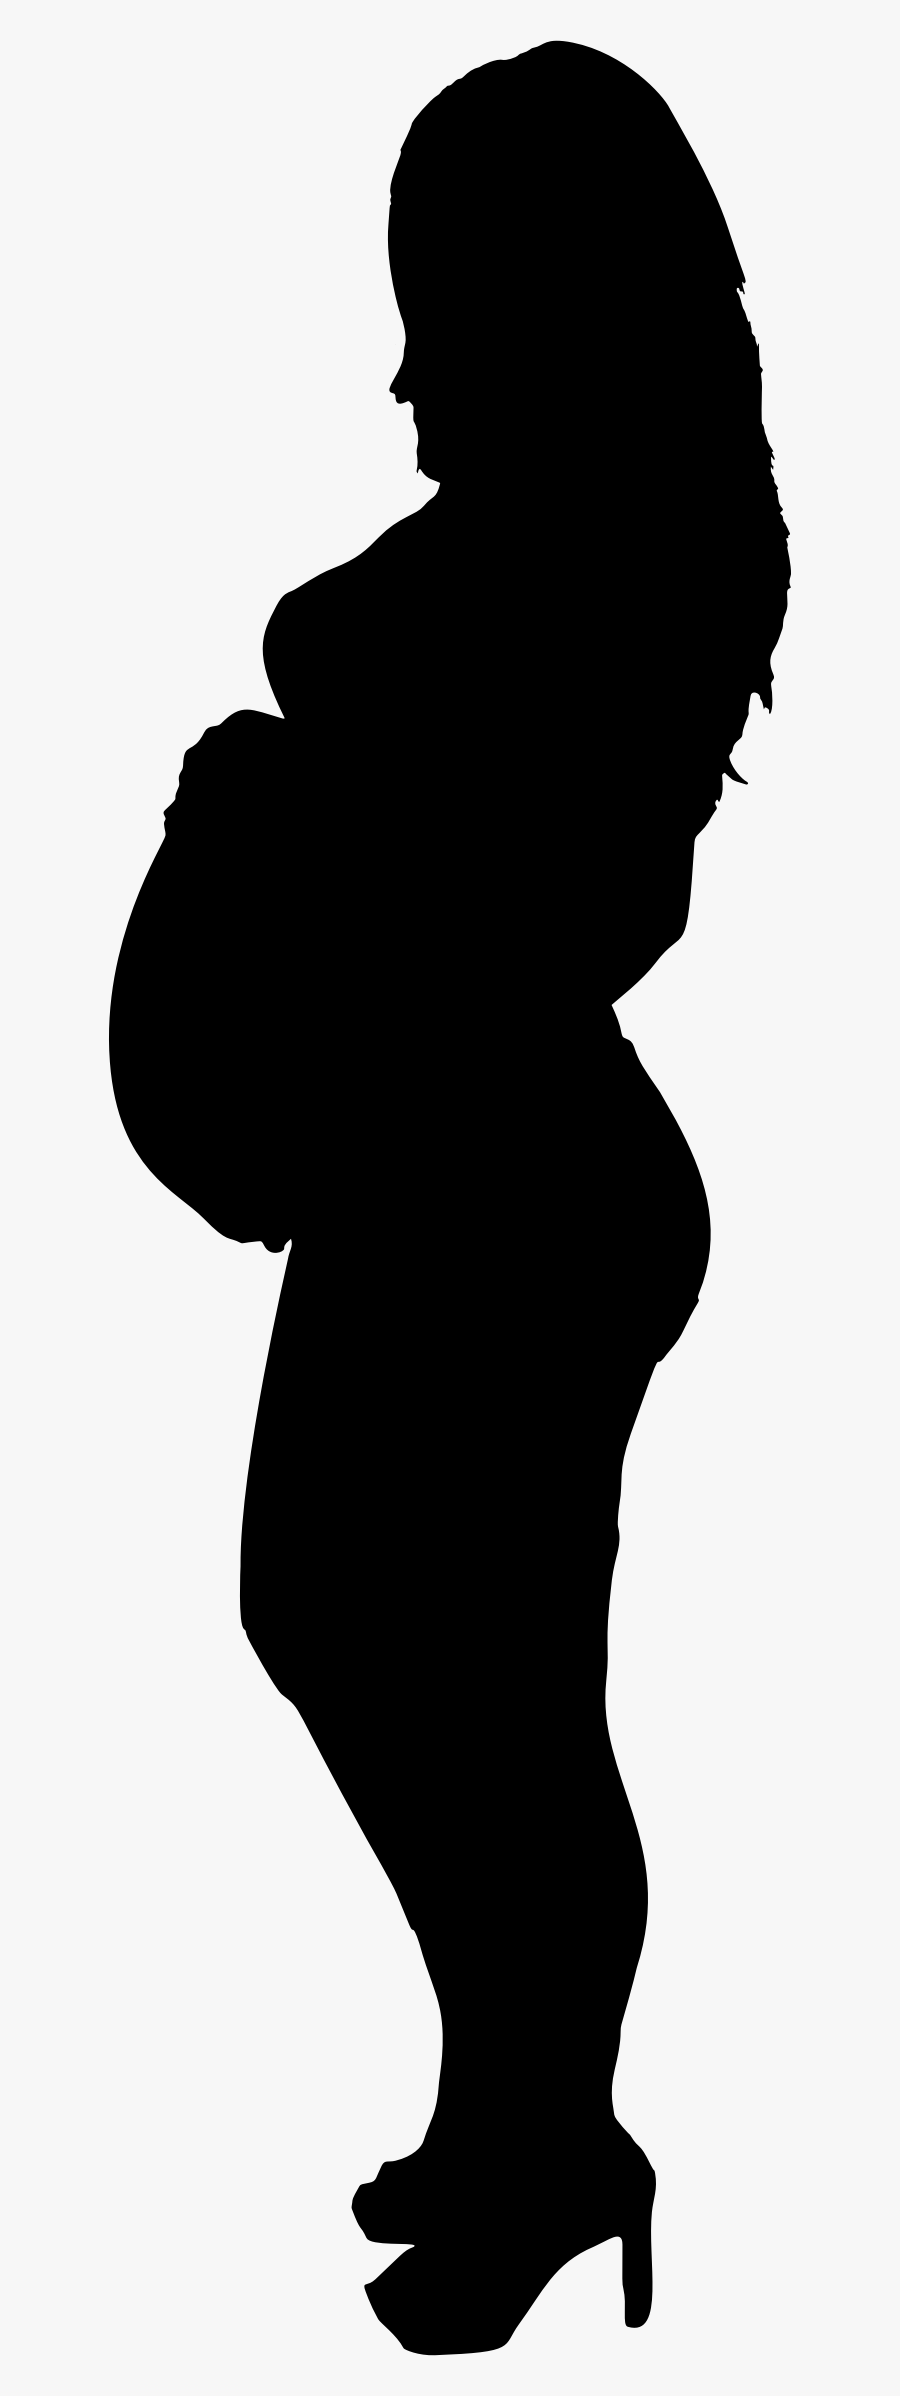 Clip Art Silhouette Pregnant Woman - Pregnant Woman Silhouette ...